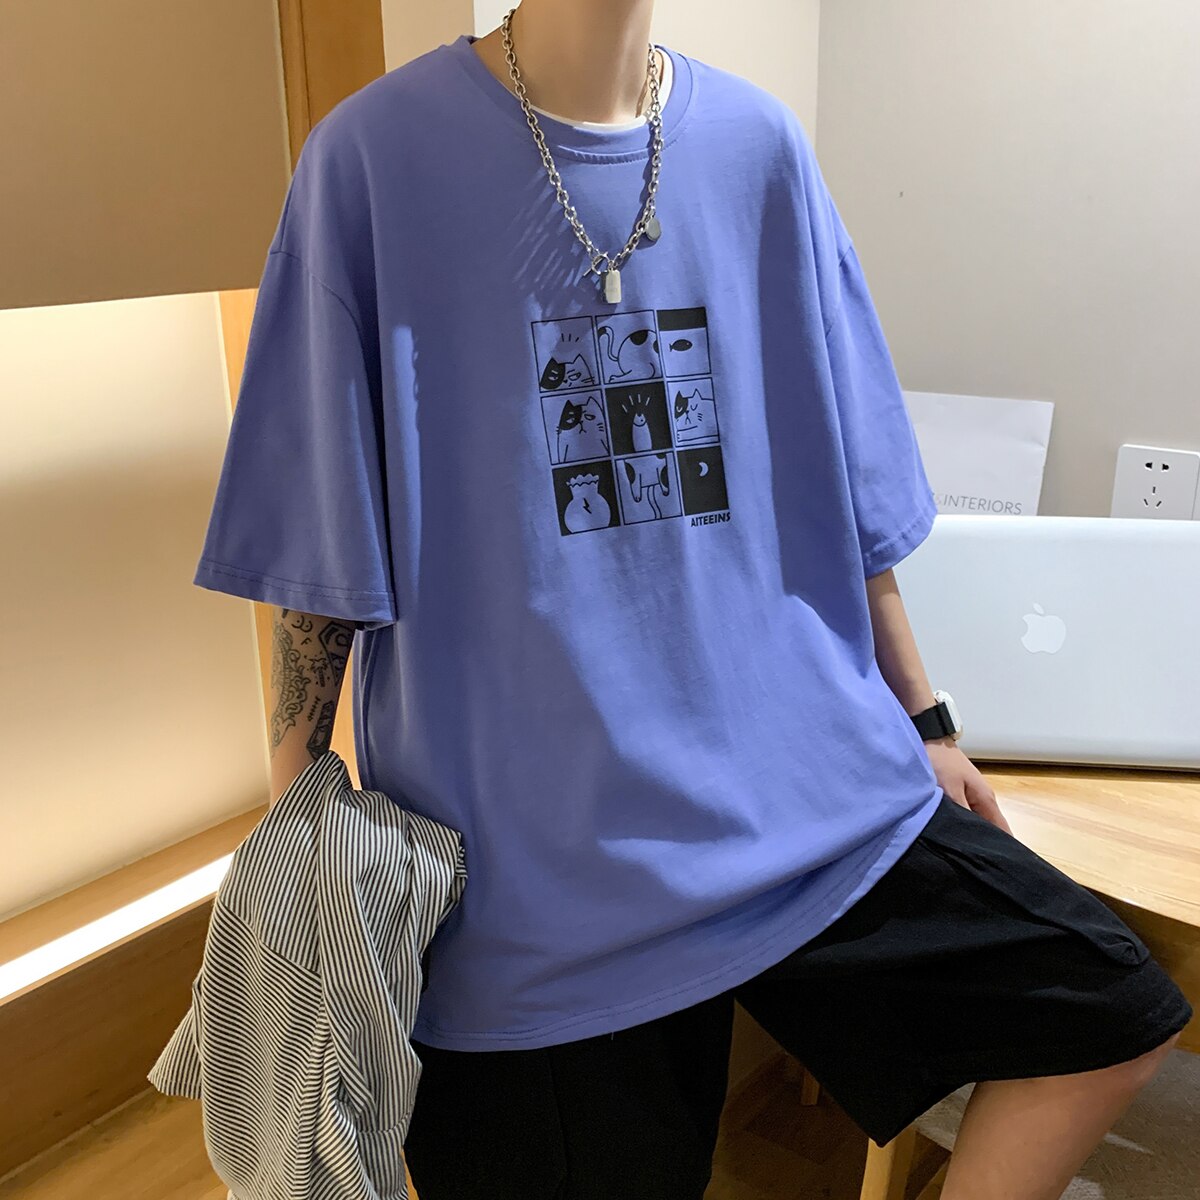 "Sqaure House" Unisex Men Women Streetwear Graphic T-Shirt Daulet Apparel